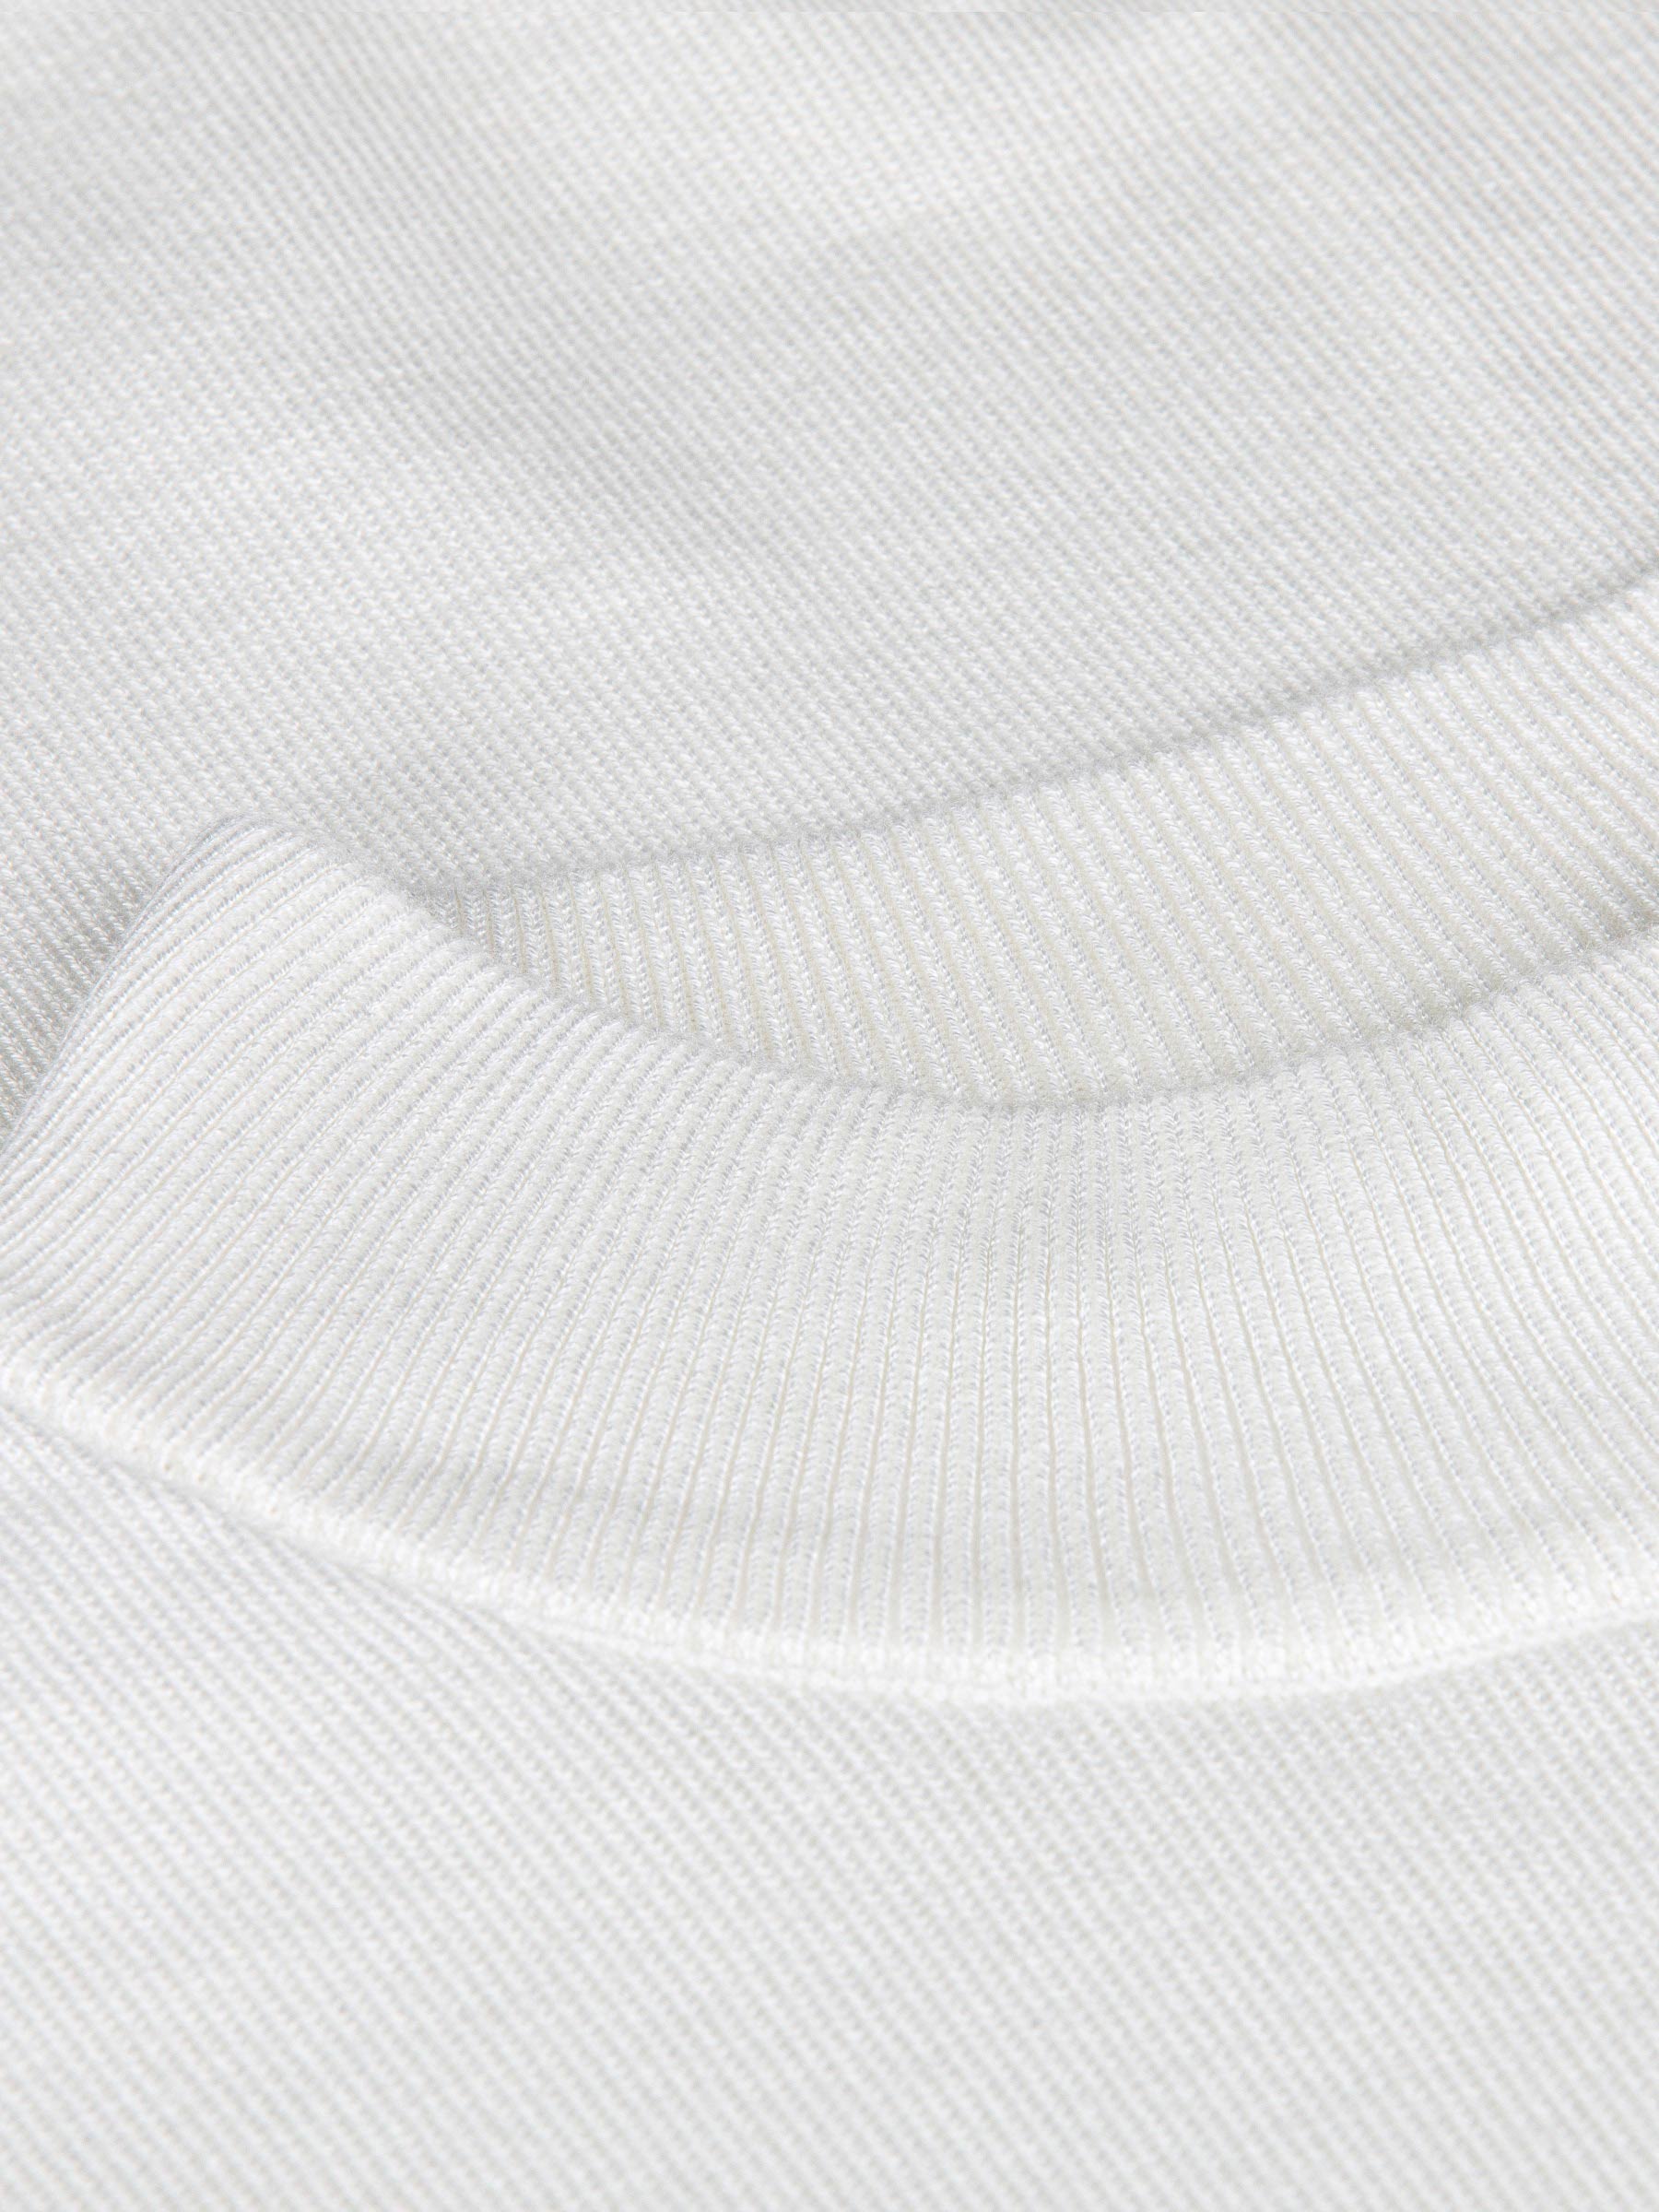 Siena Round-Necked White Sweater